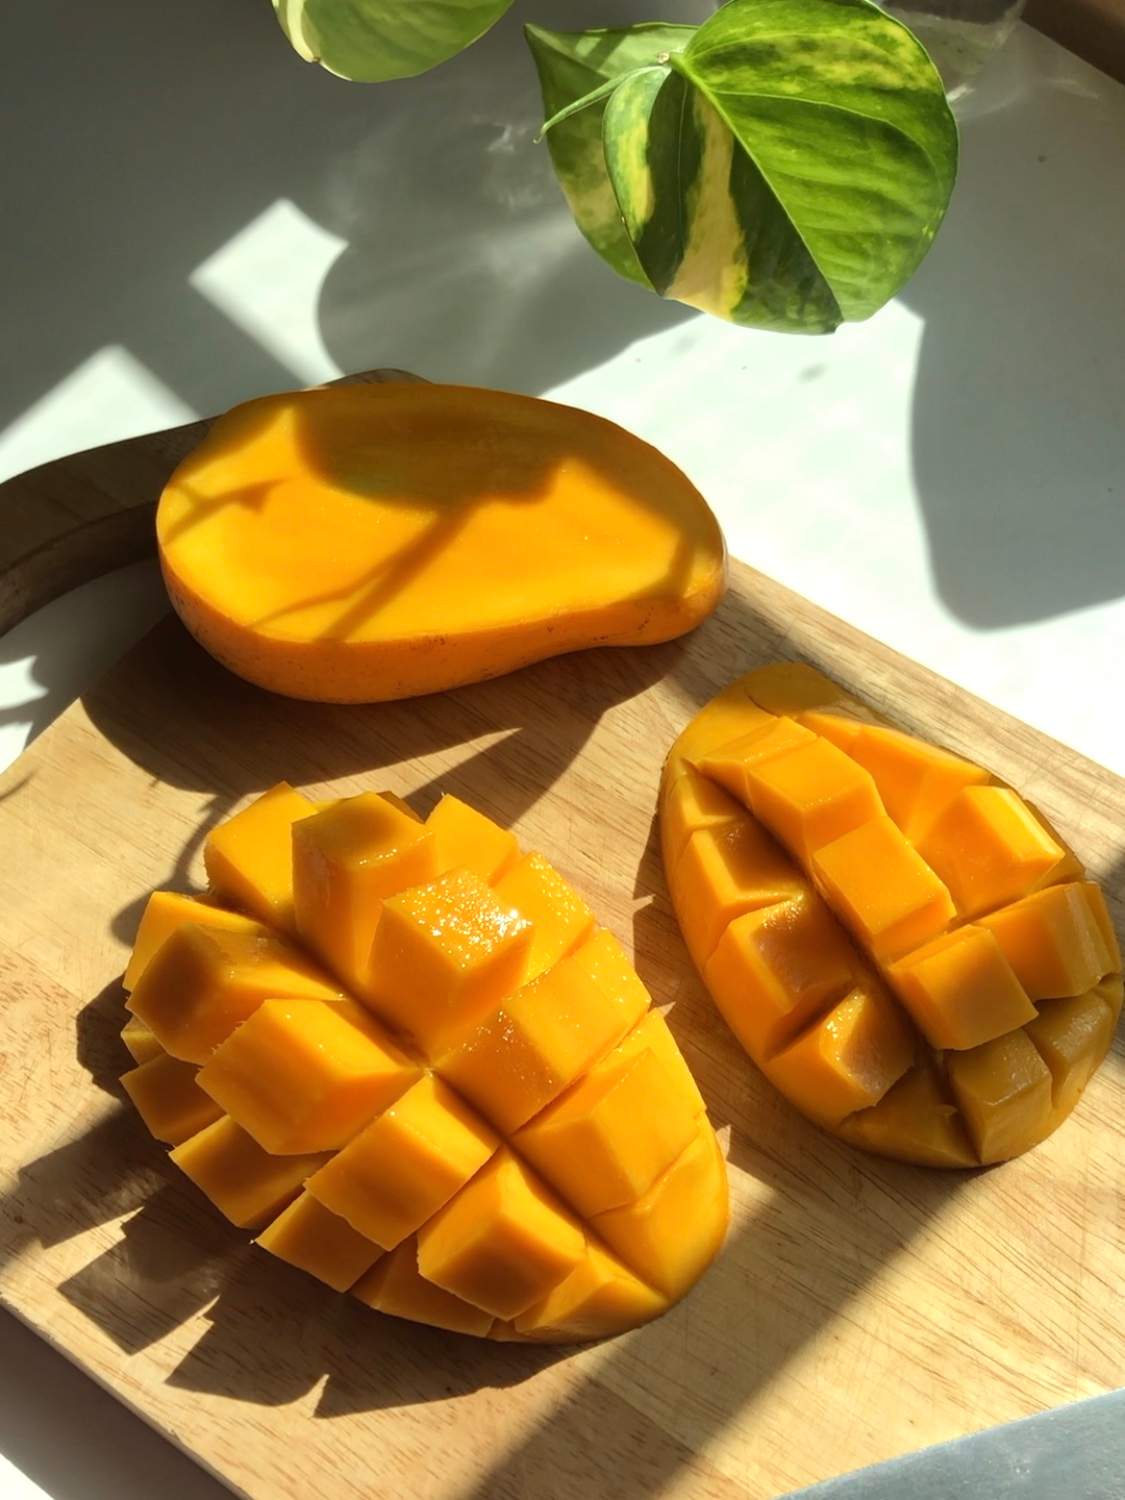 Mango tastes as sweet as it looks